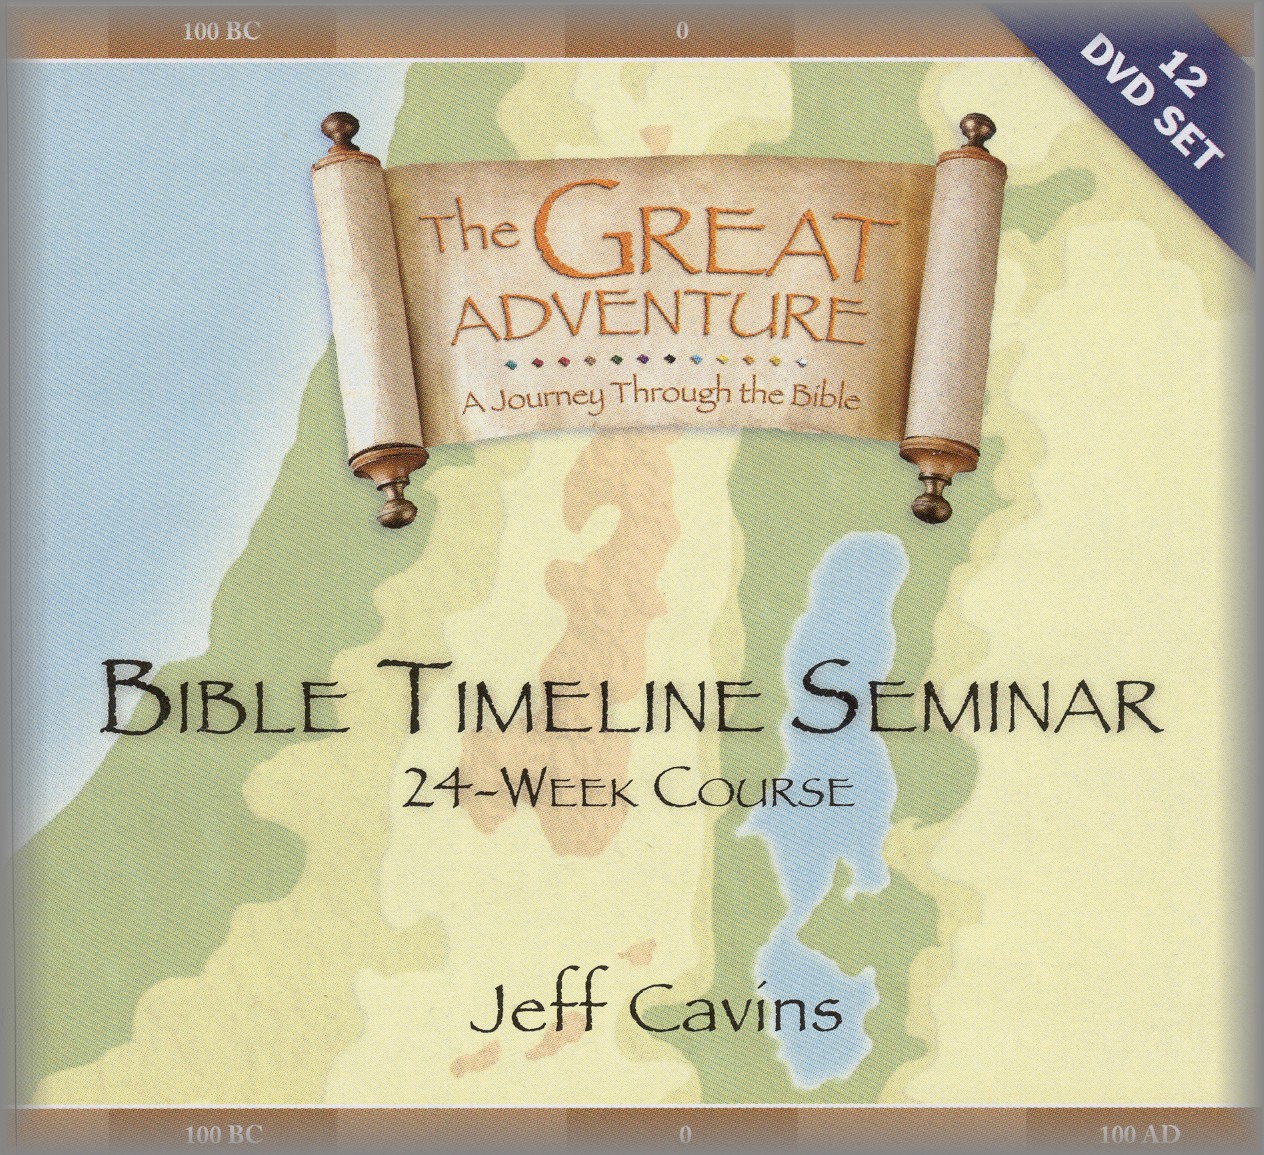 Great Adventure Bible Maps